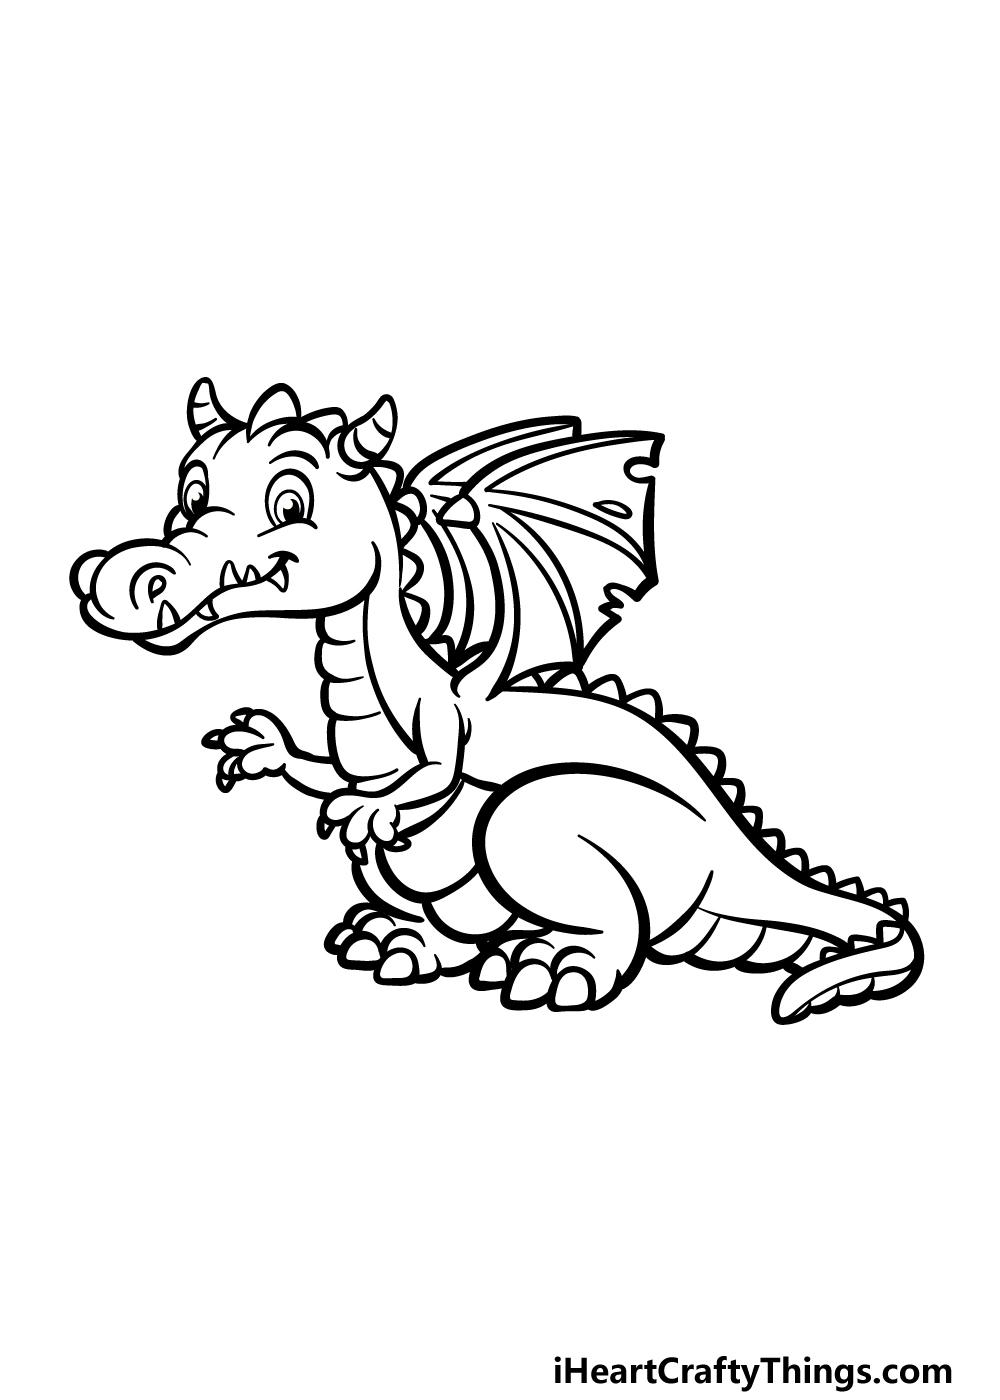 how to draw a cartoon dragon step 5